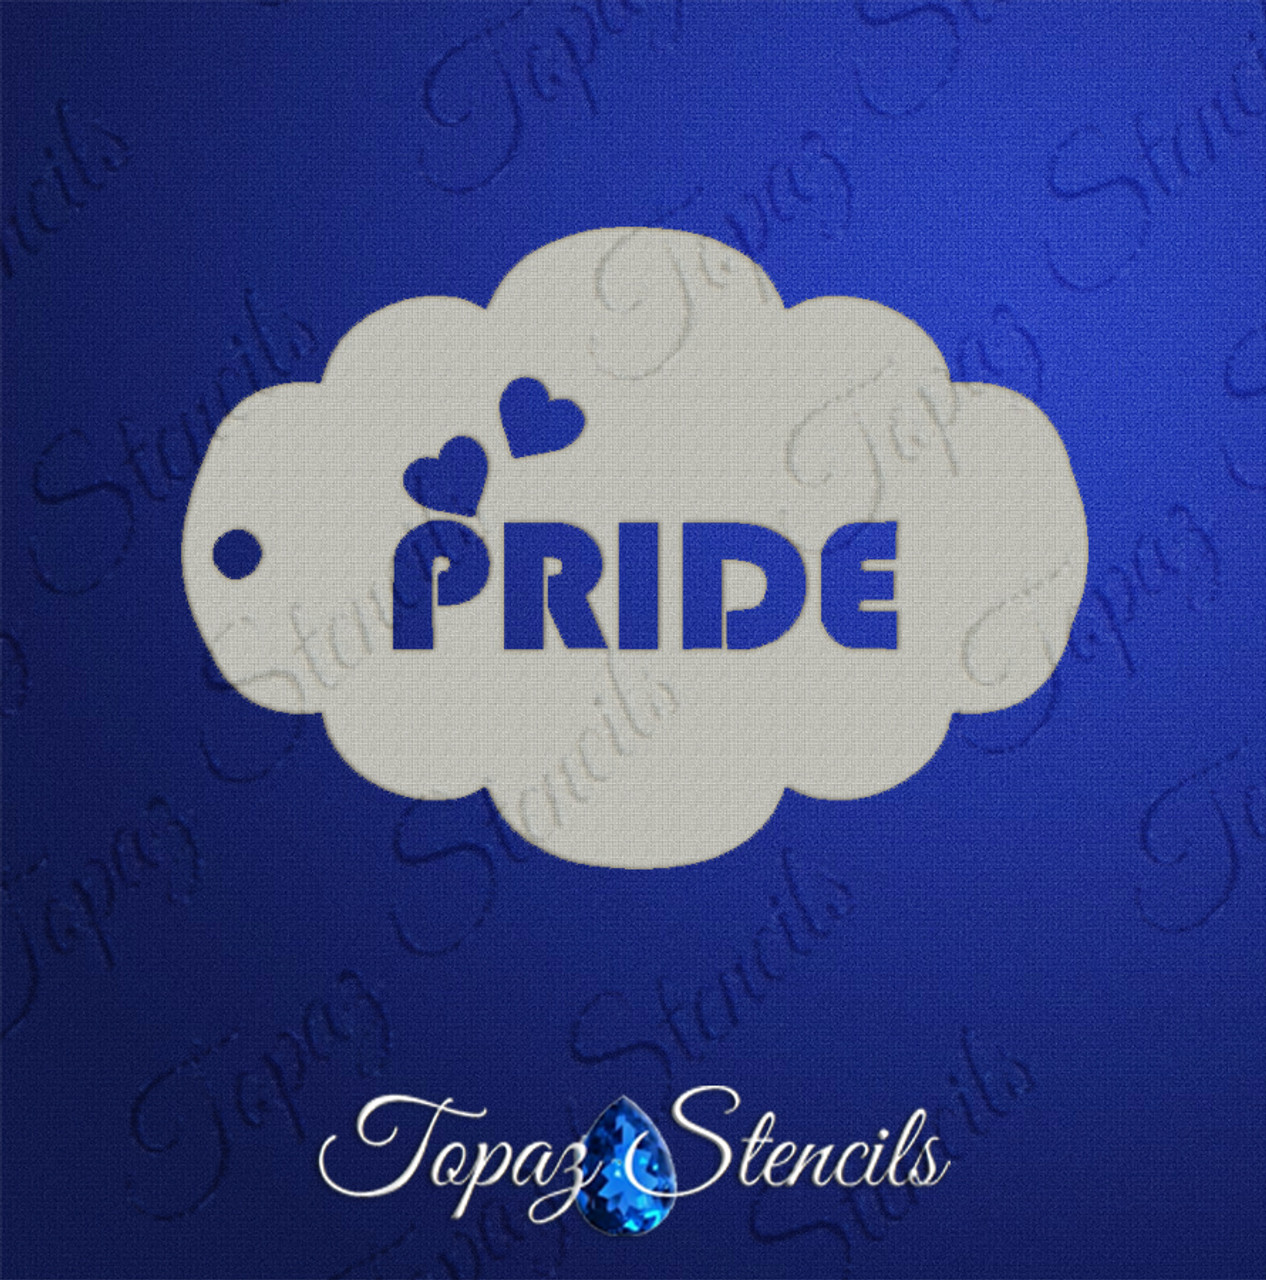 Pride - Topaz Stencils